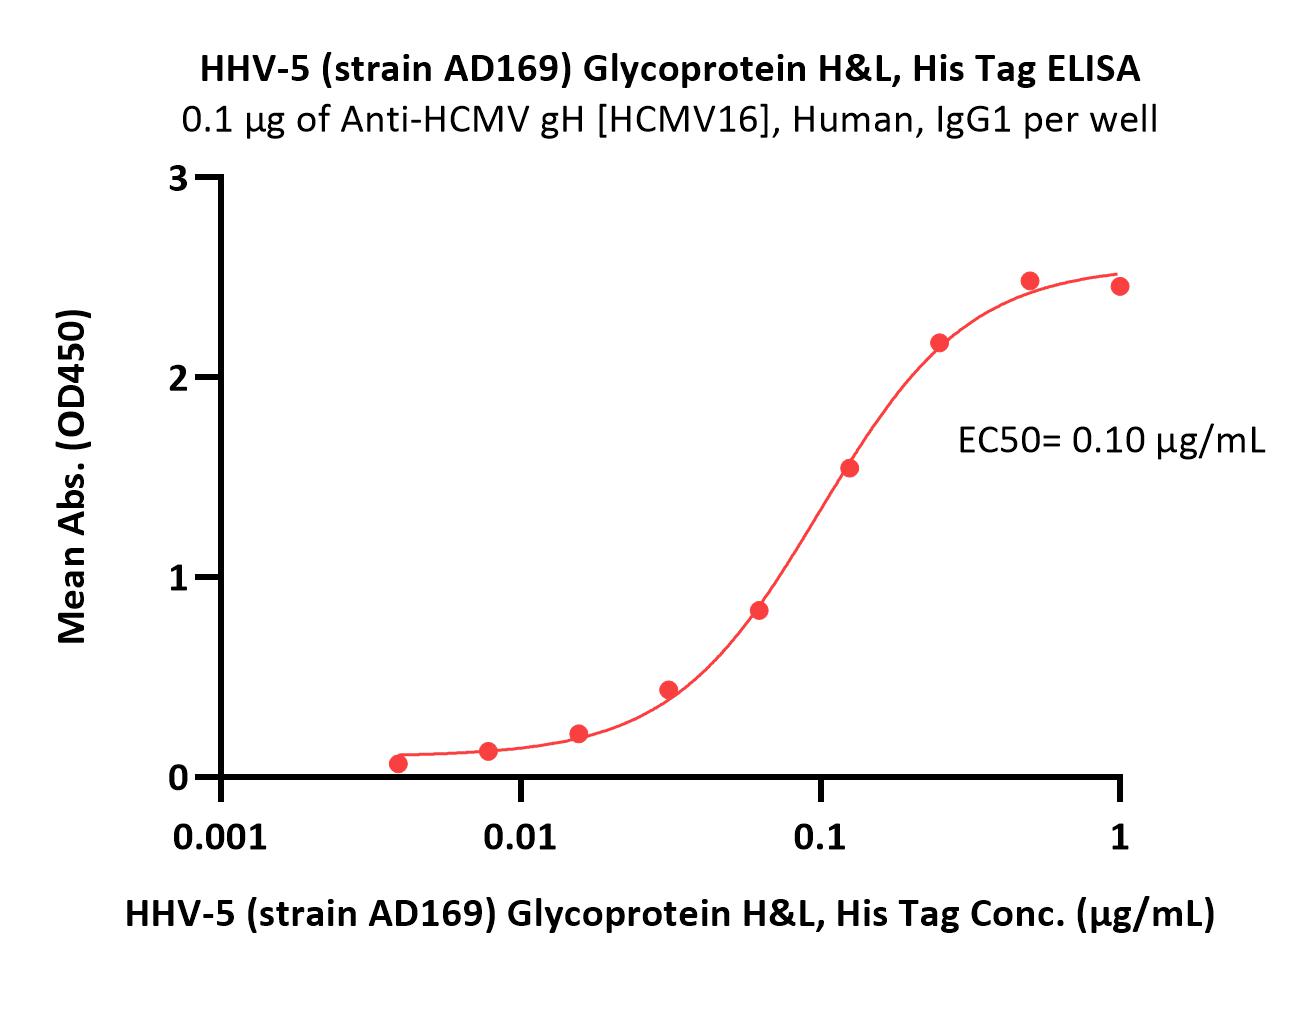 Glycoprotein H&L ELISA